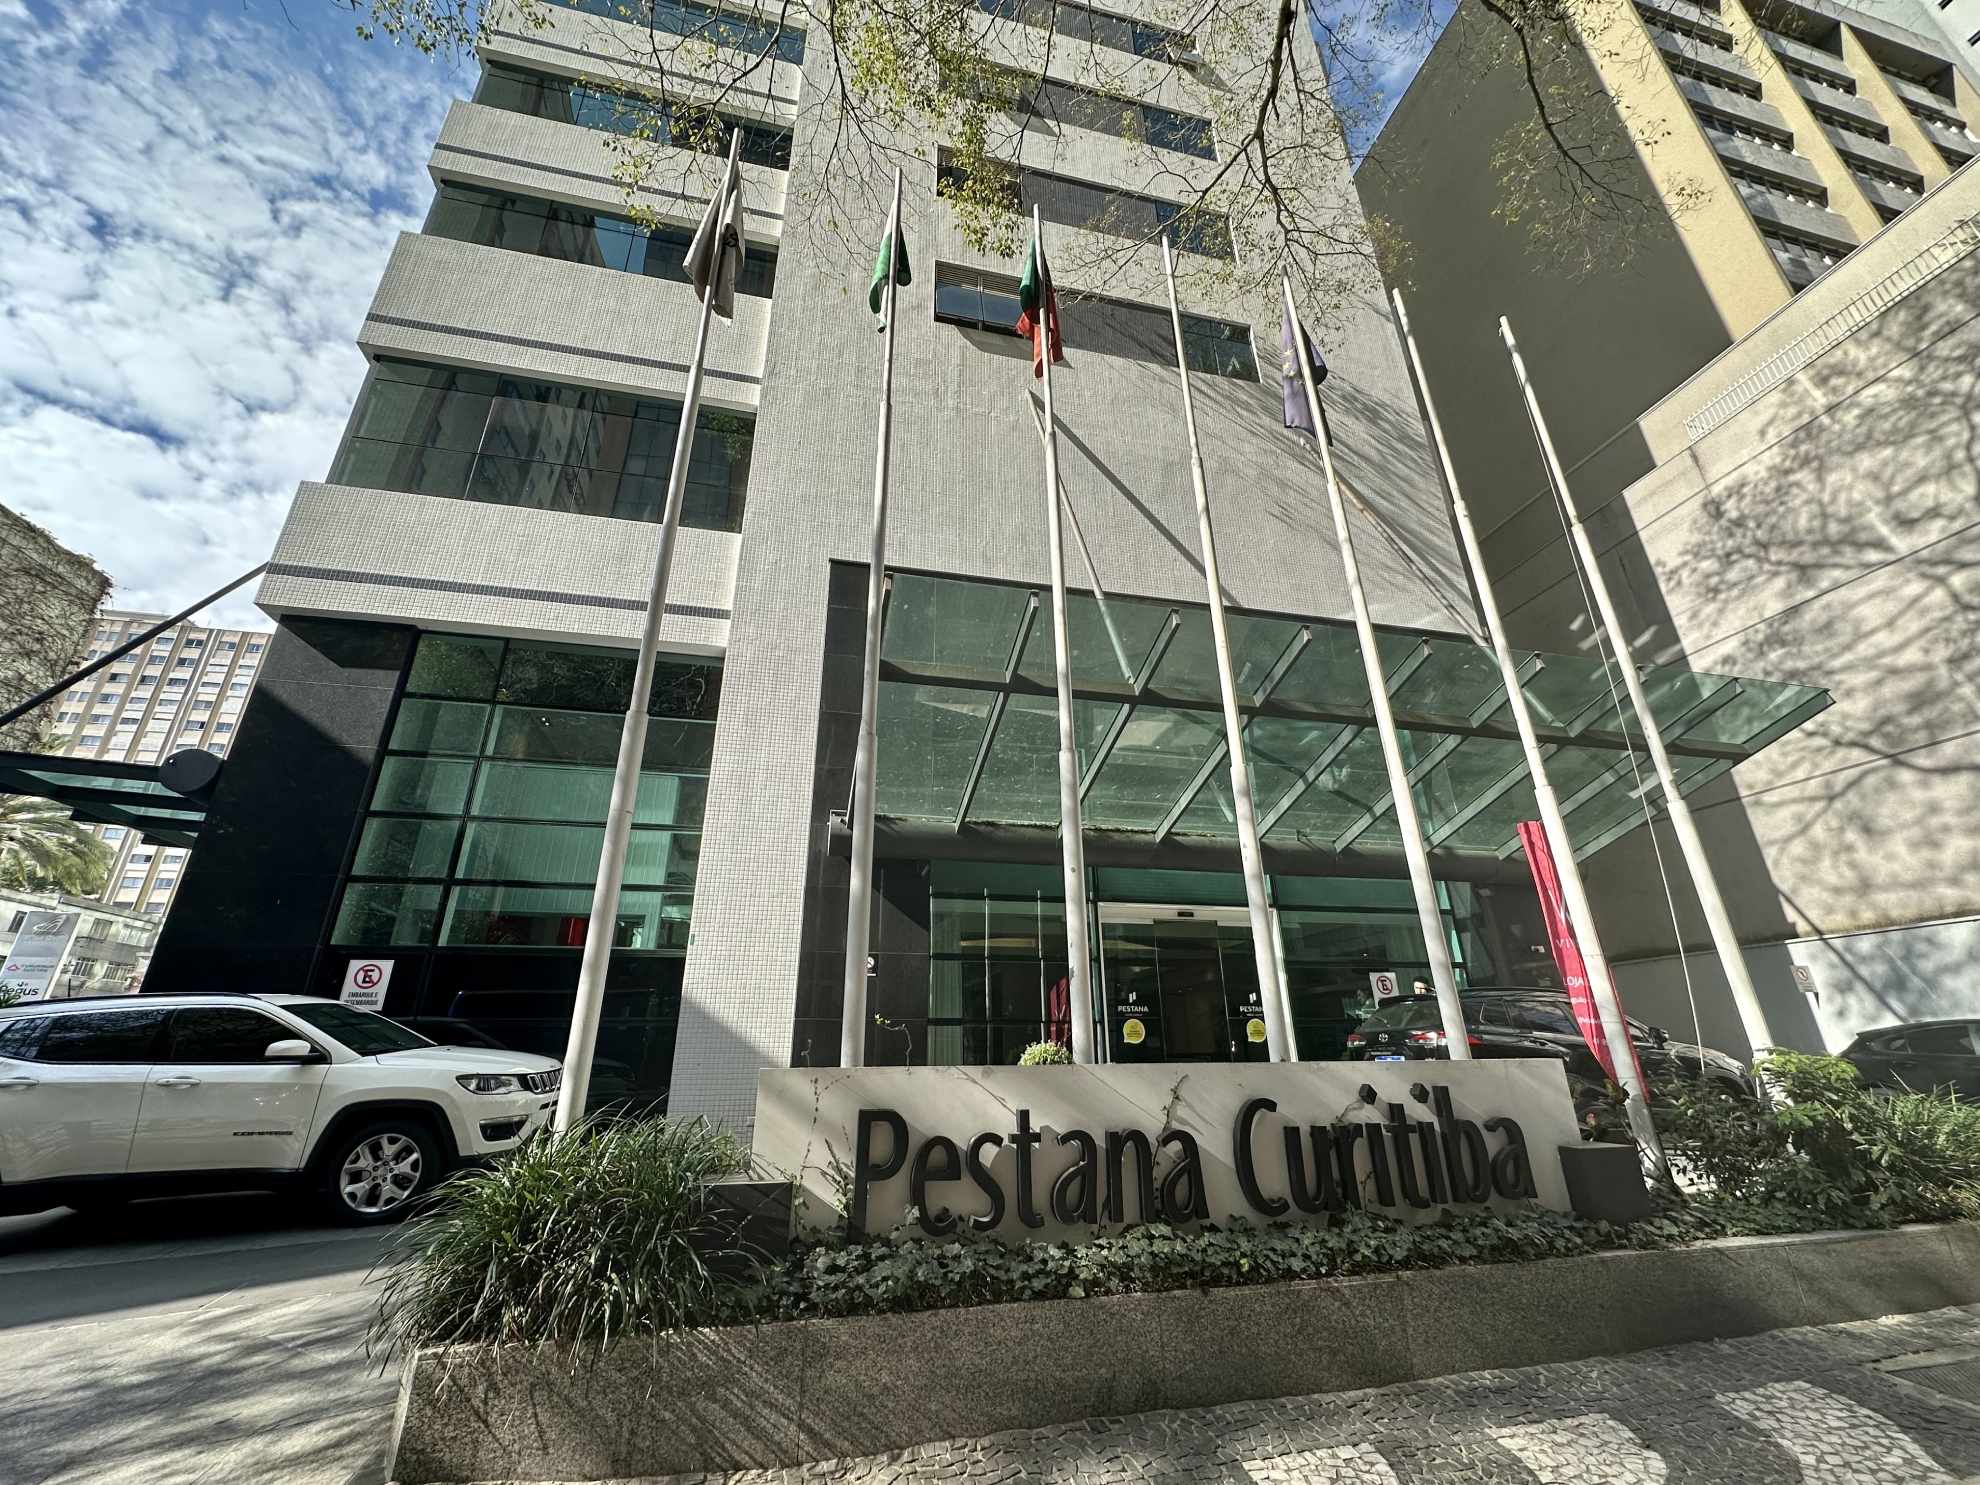 Hotel Pestana Curitiba